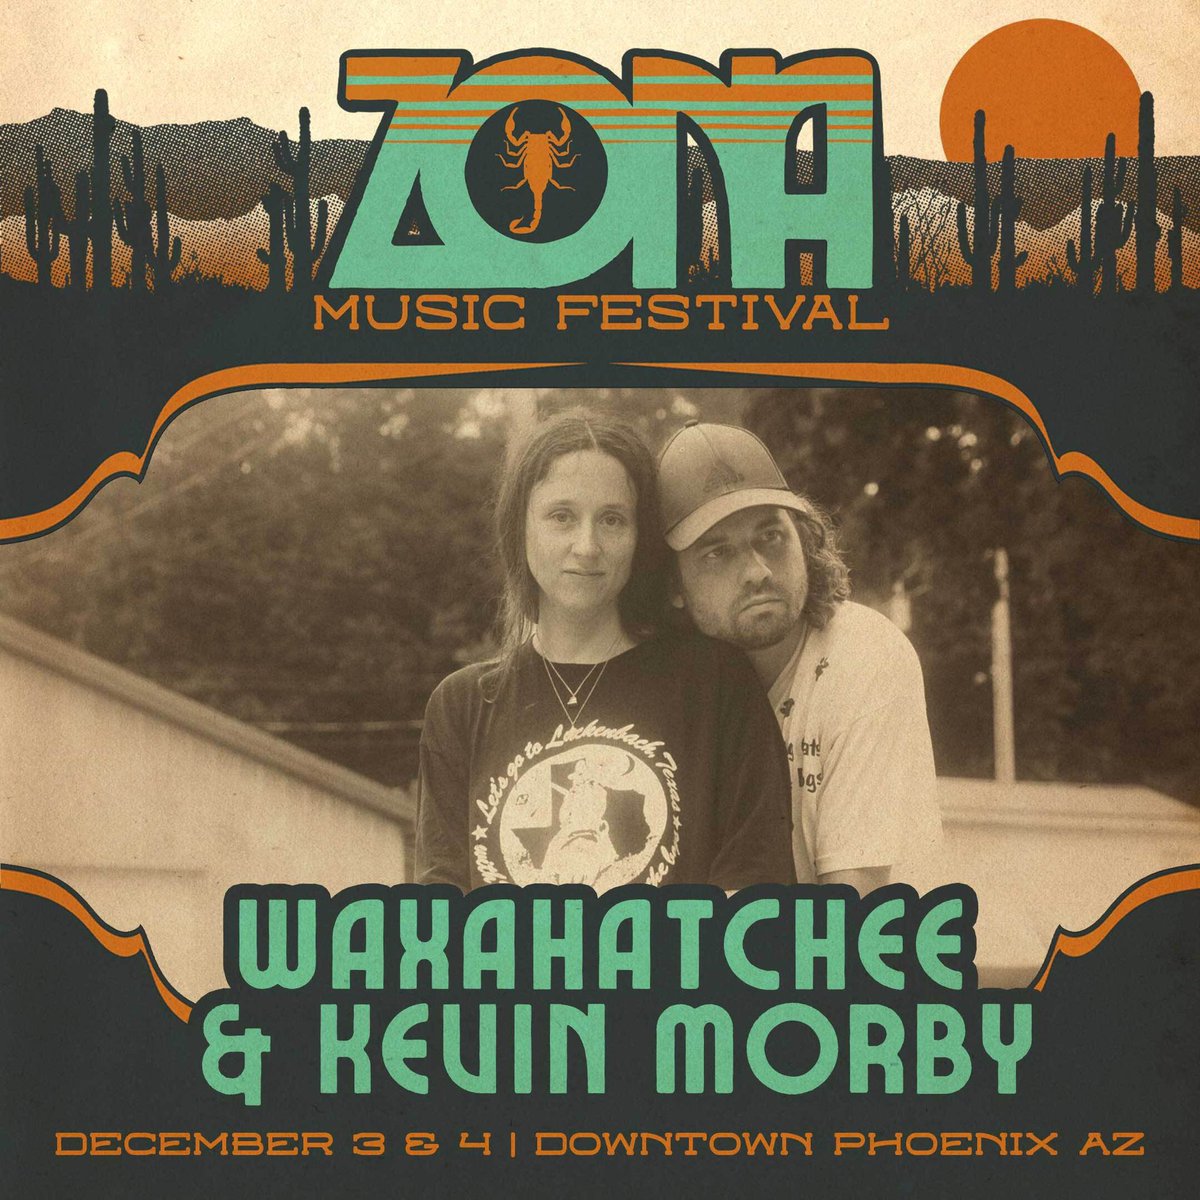 Catch Waxahatchee and @kevinmorby at @ZONAmusicfest this December in Downtown Phoenix, AZ zonamusicfest.com